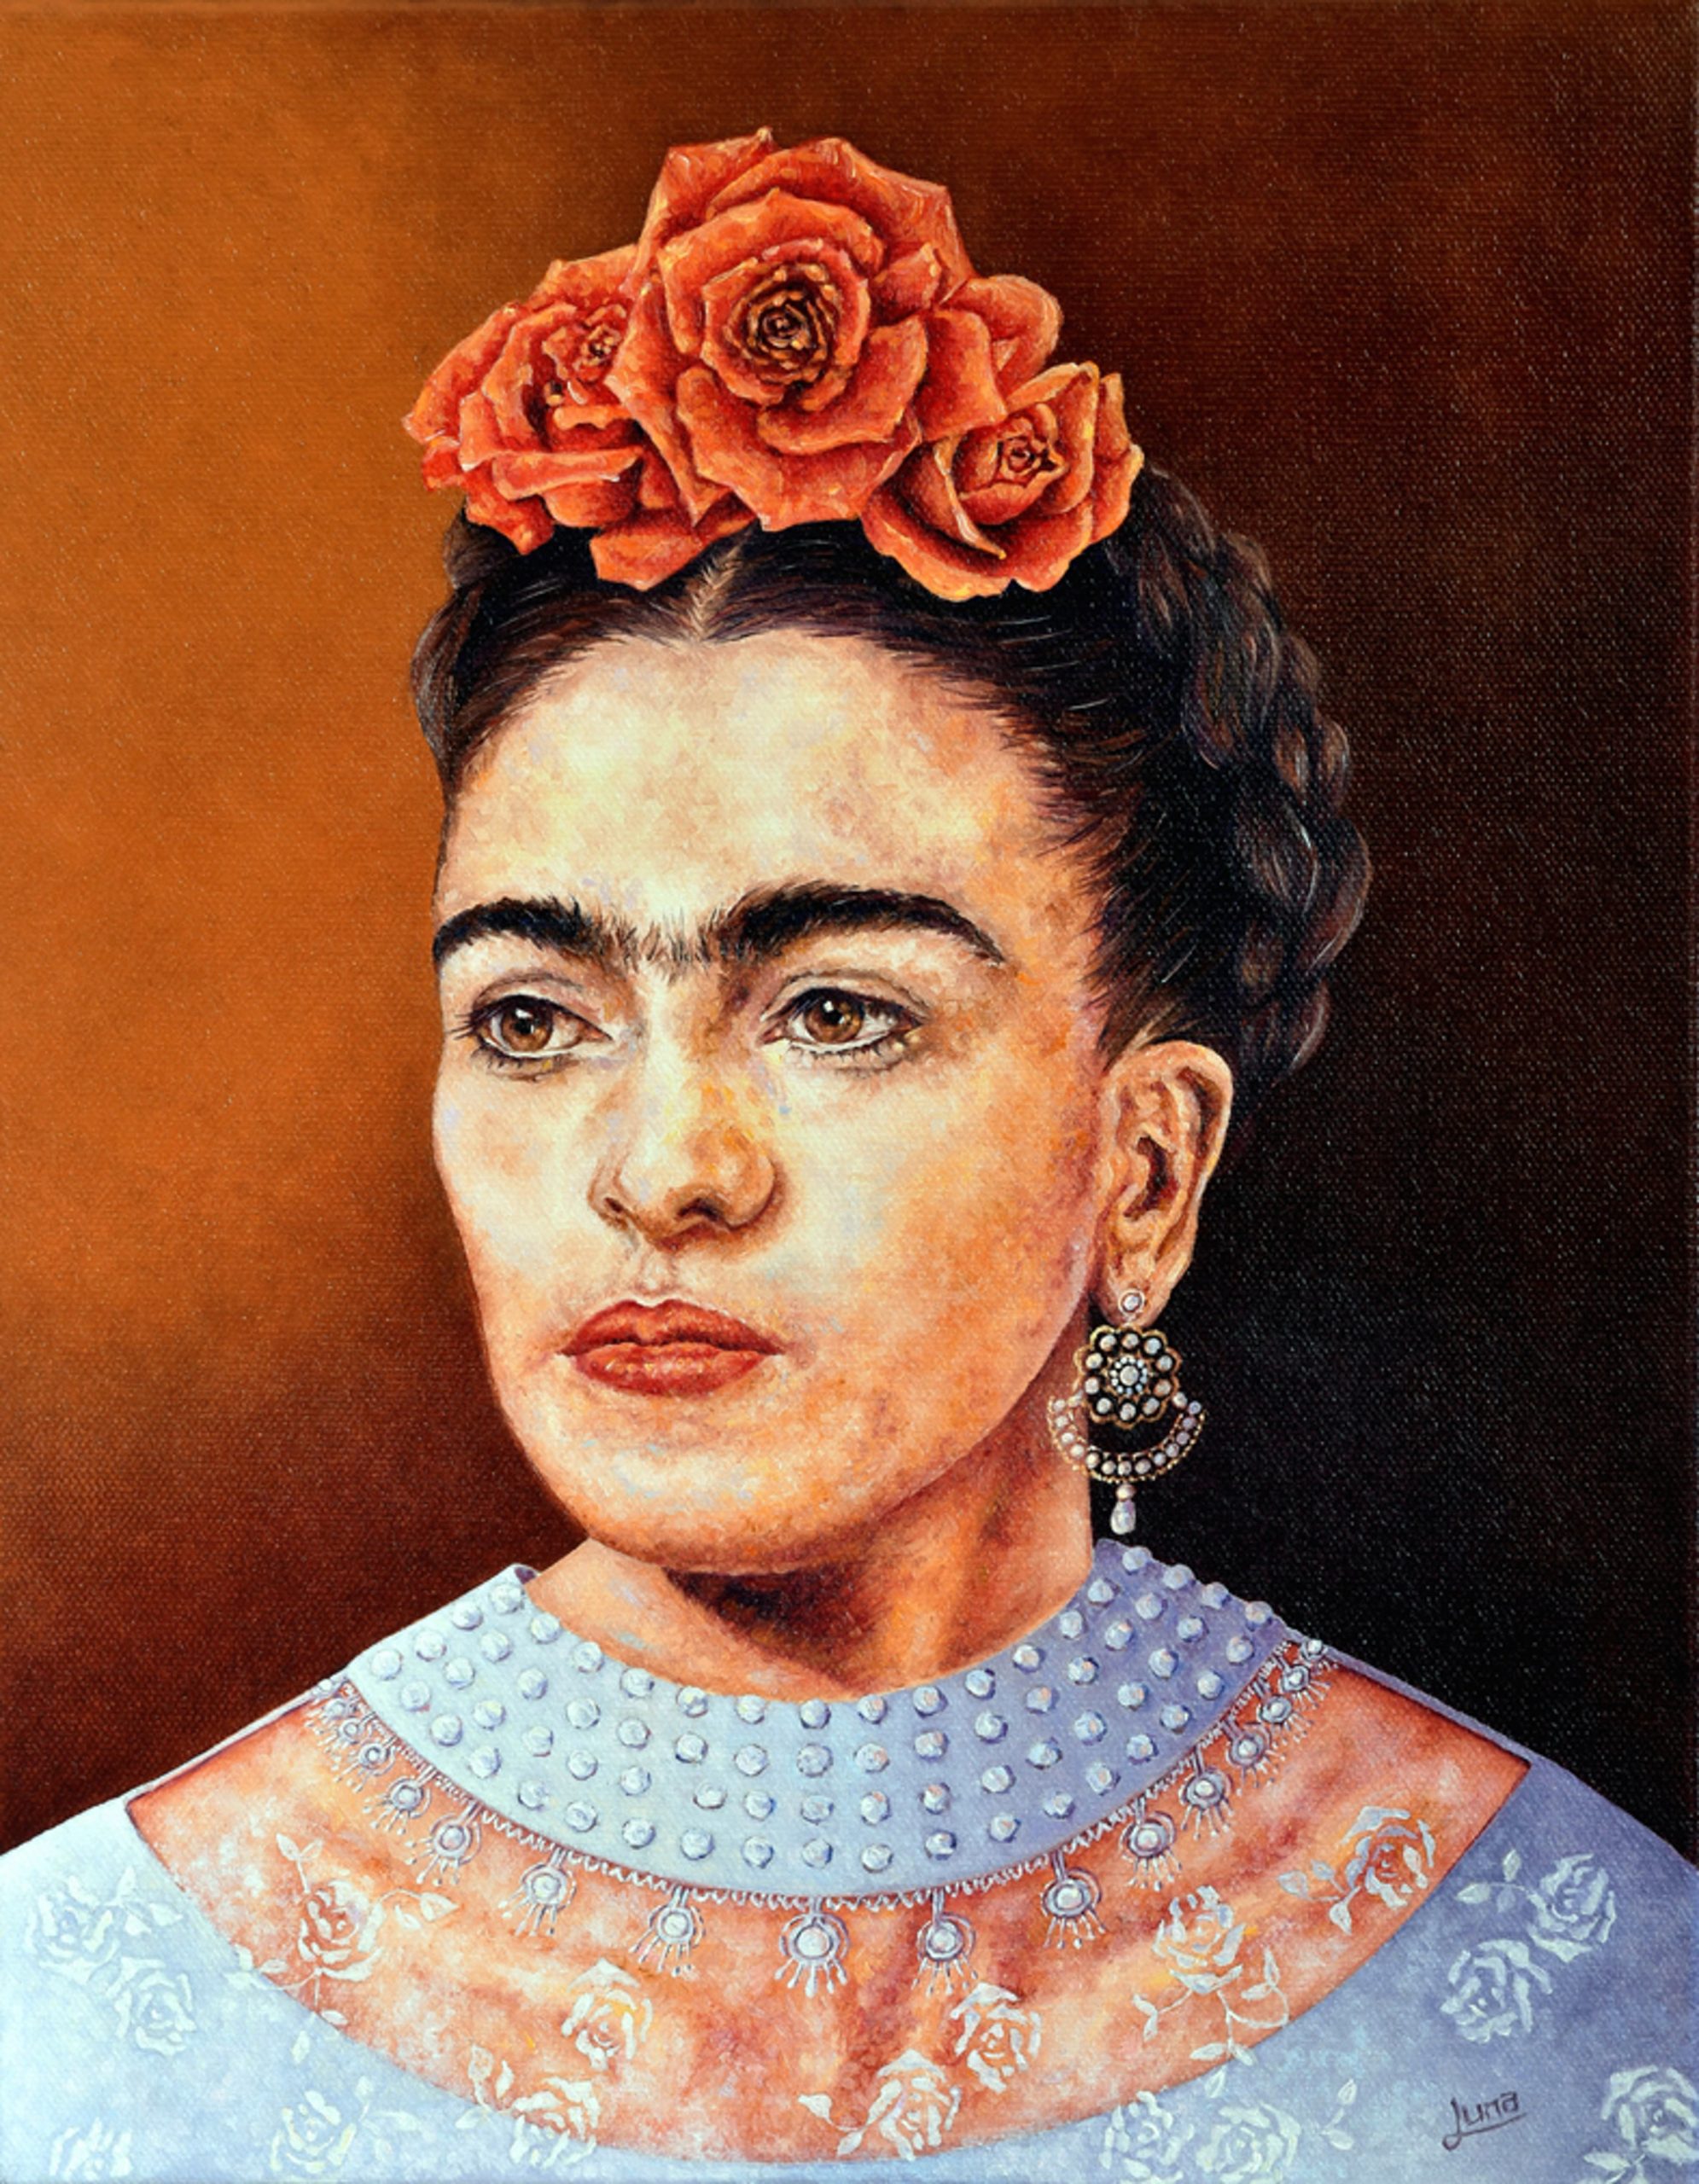 Frida Khalo Portrait by Bluethumb artist Luna Vermeulen